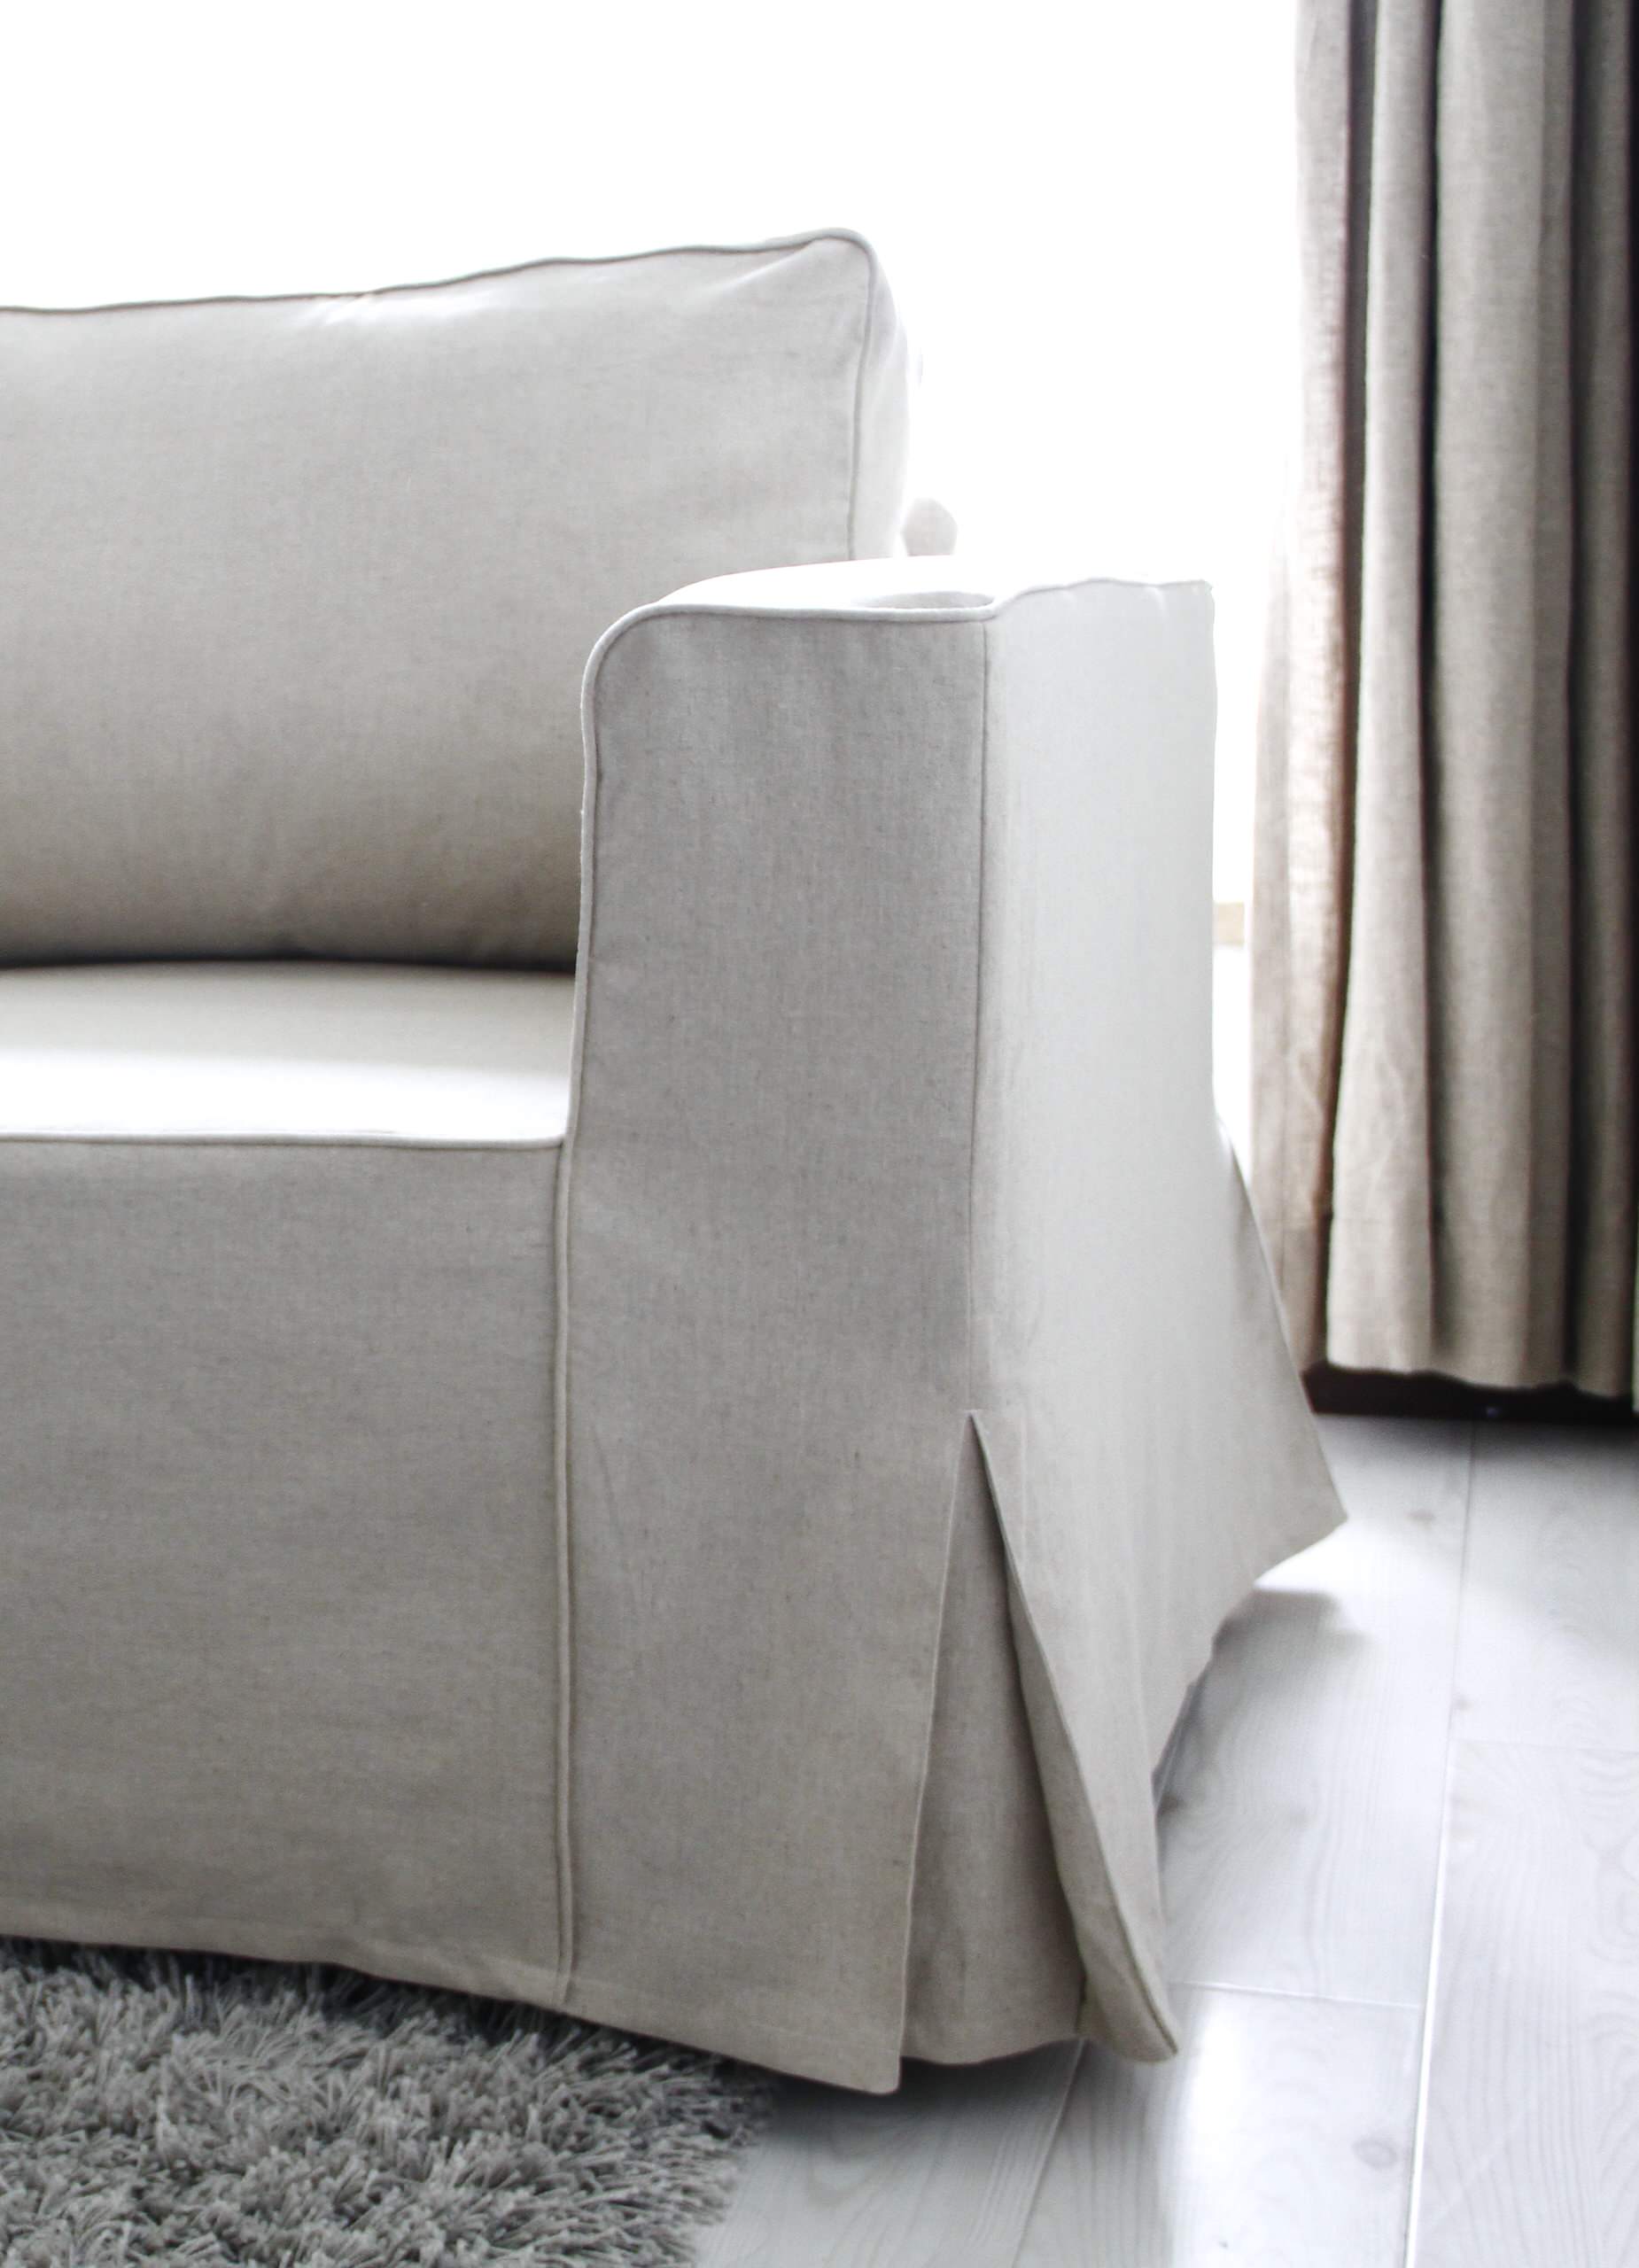 IKEA Manstad Sofa Bed Custom Linen Slipcovers - Contemporary - Living Room  - Melbourne - by Comfort Works Custom Slipcovers | Houzz